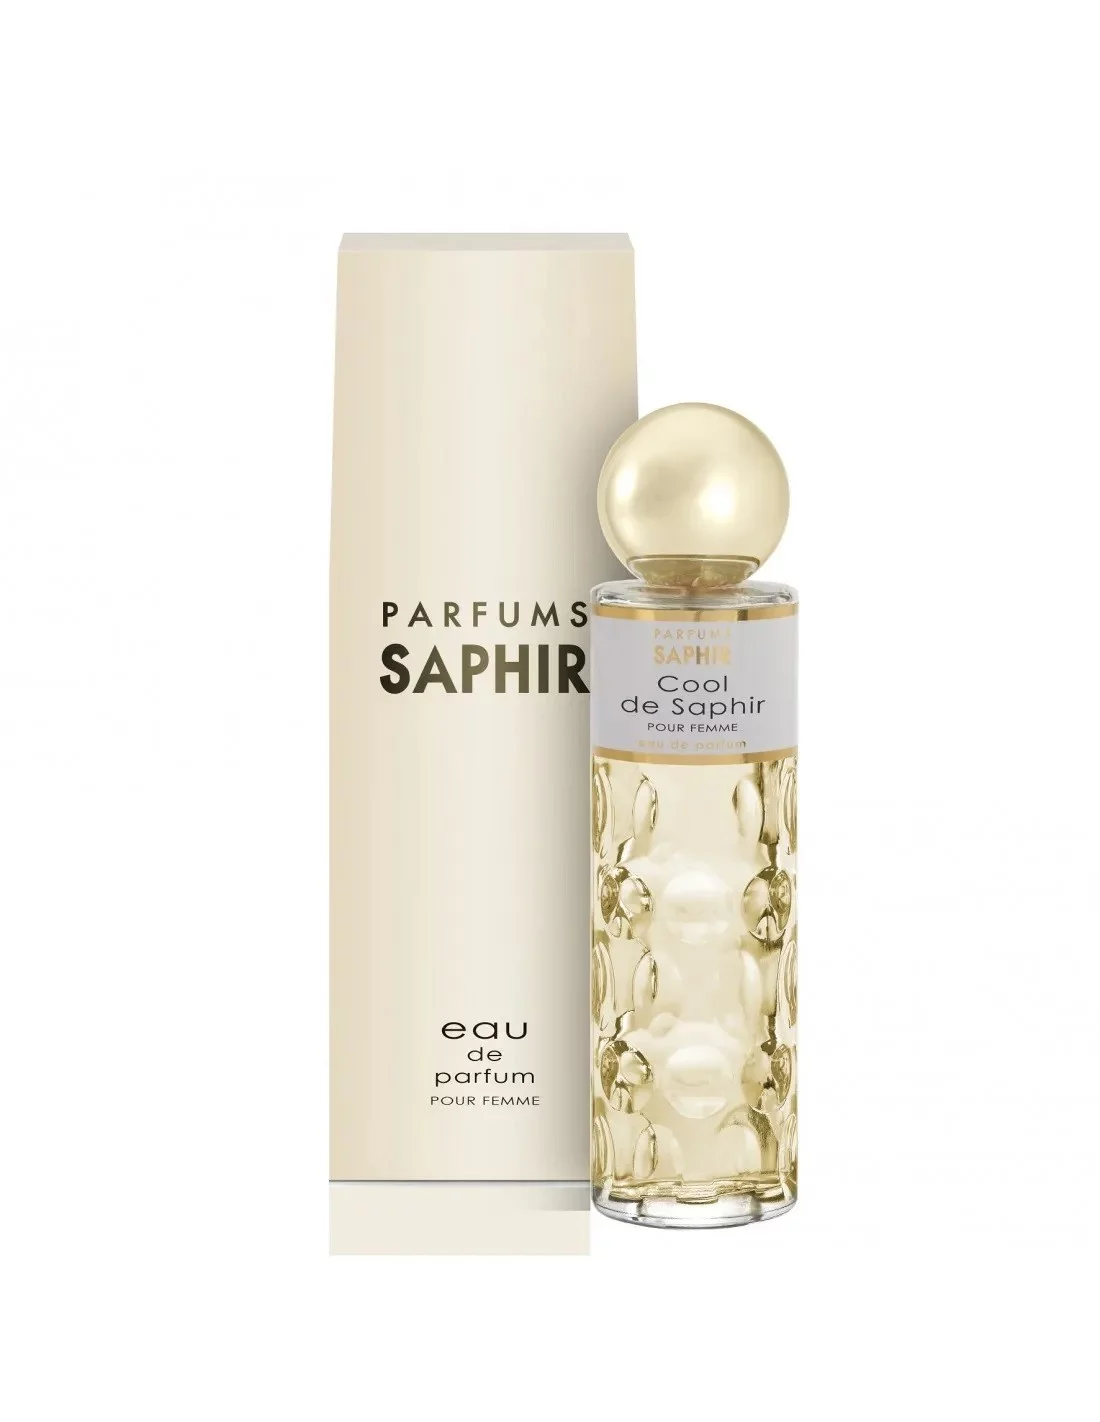 Image of Parfums Saphir - Eau de Parfum Profumo 200 ml - cool de saphir